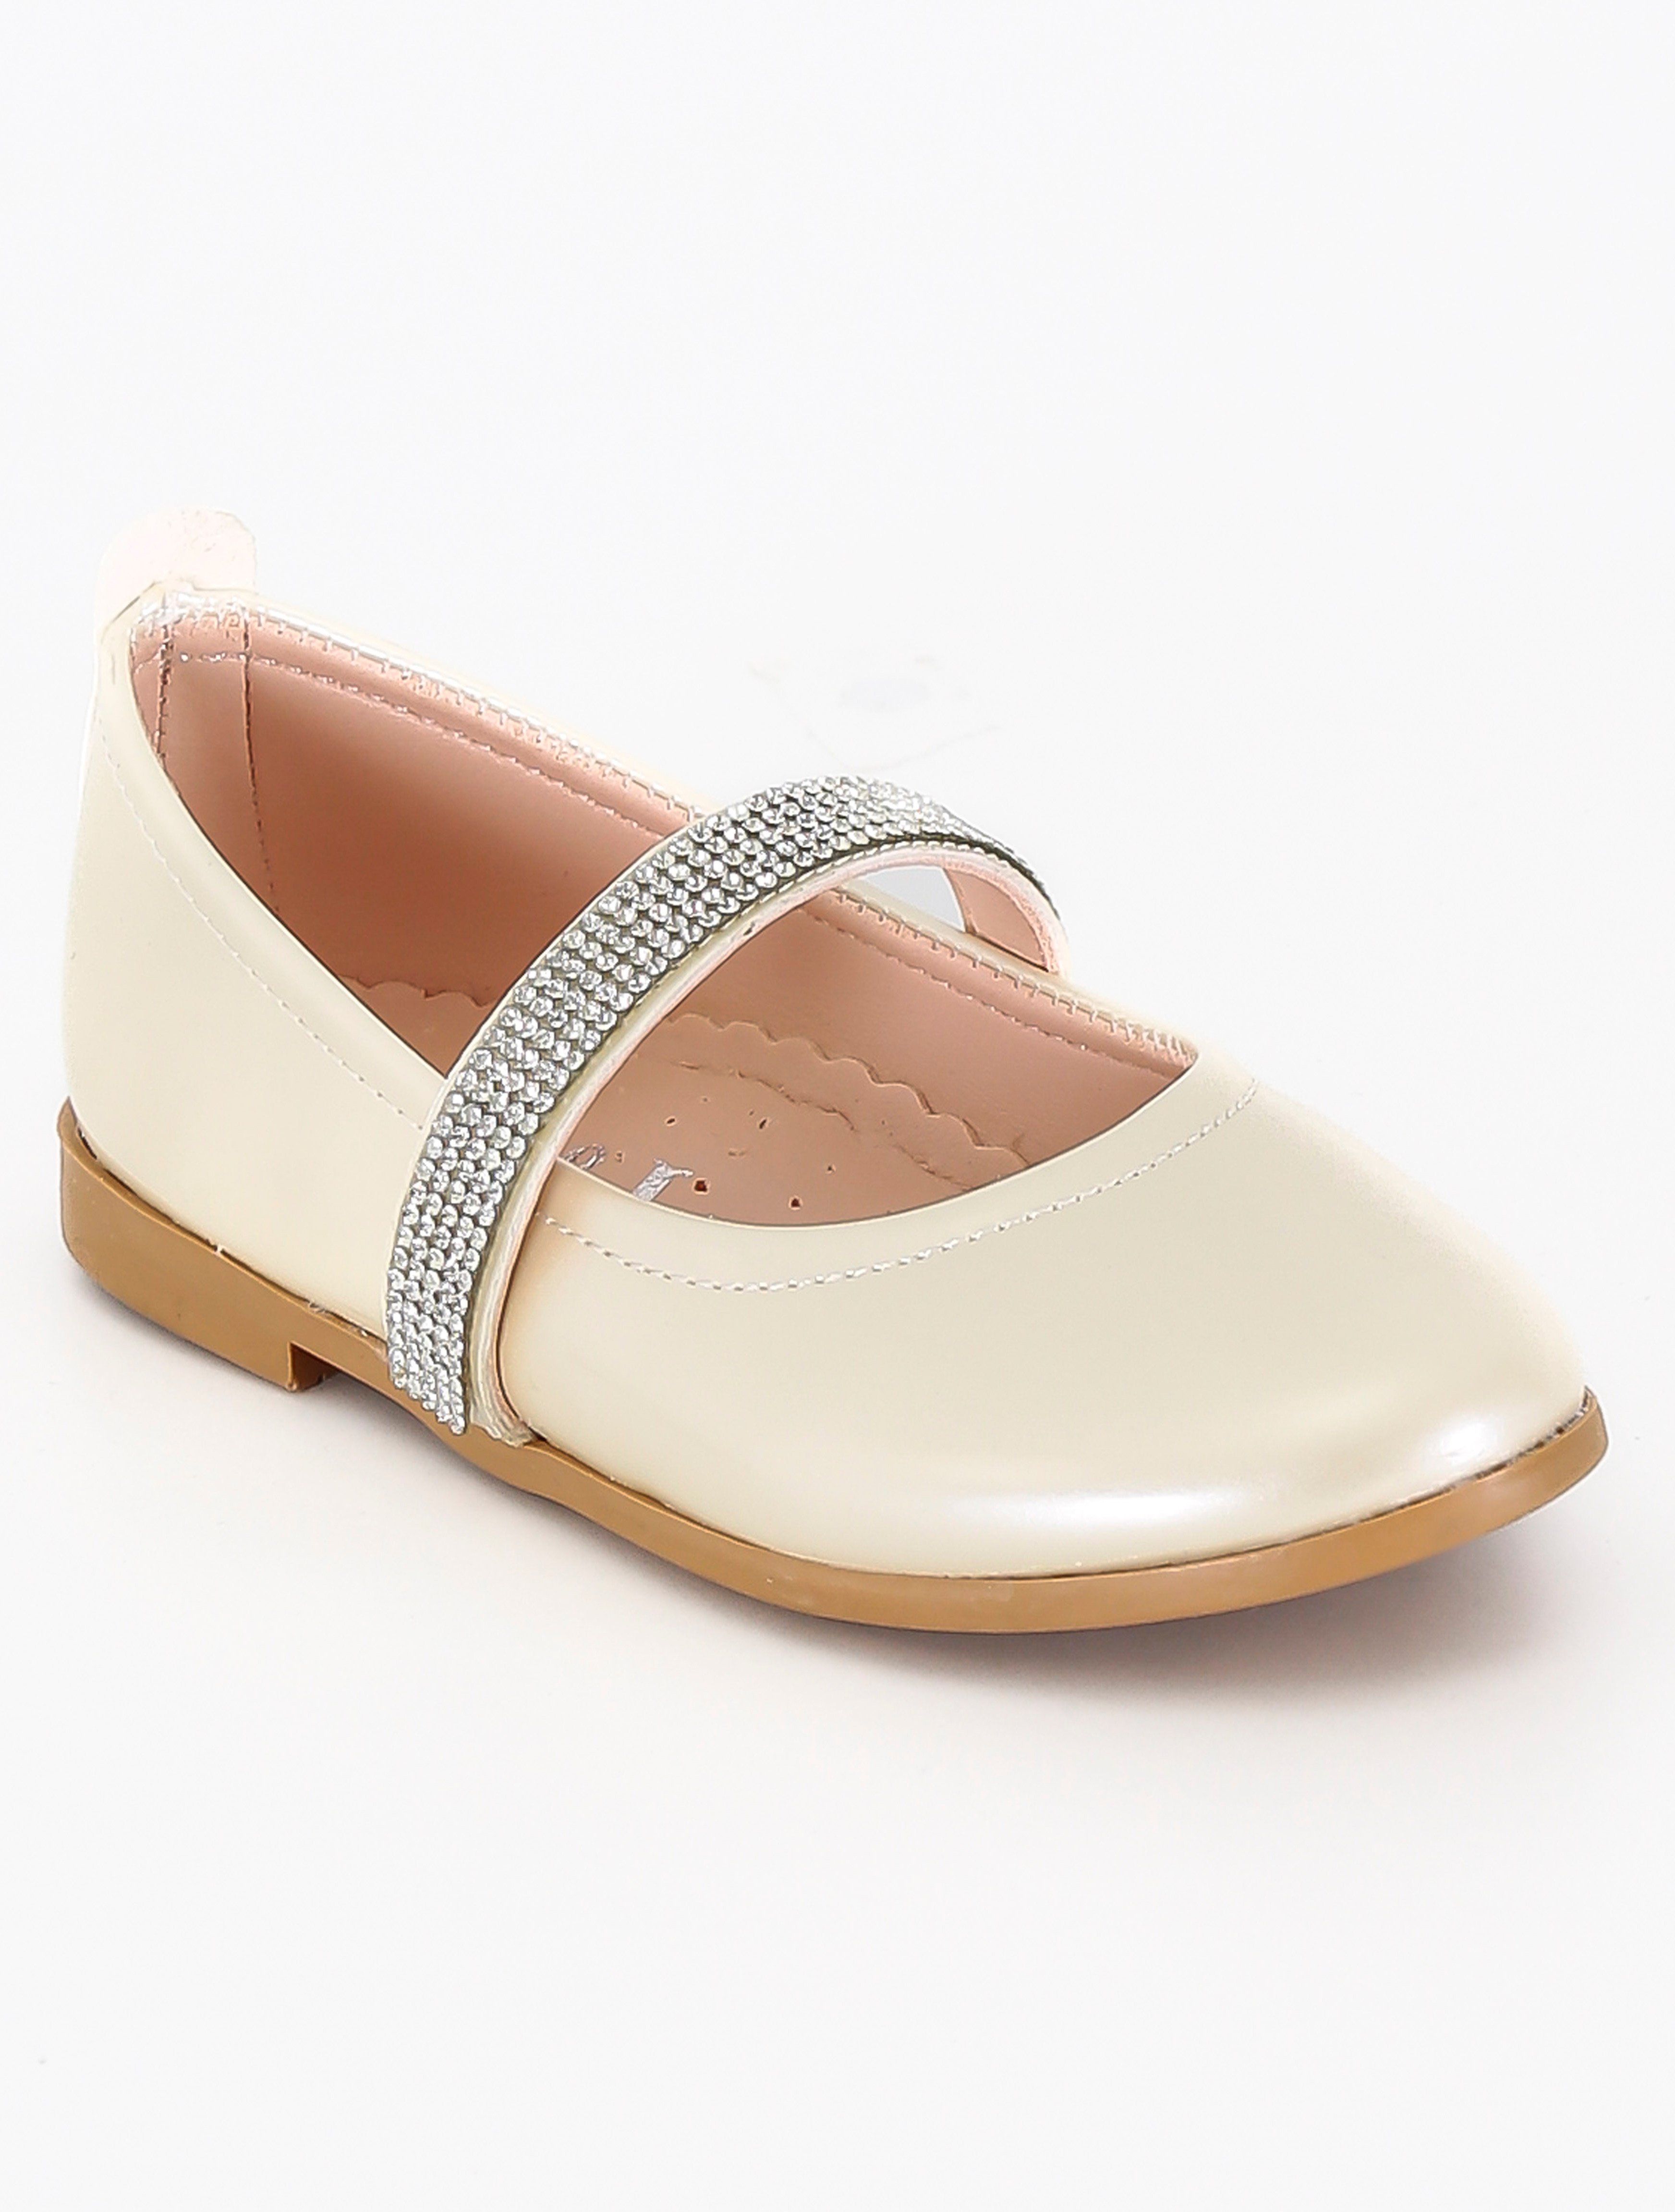 Girls Rhinestone Patent Mary Jane Shoes - ARWEN - Ivory